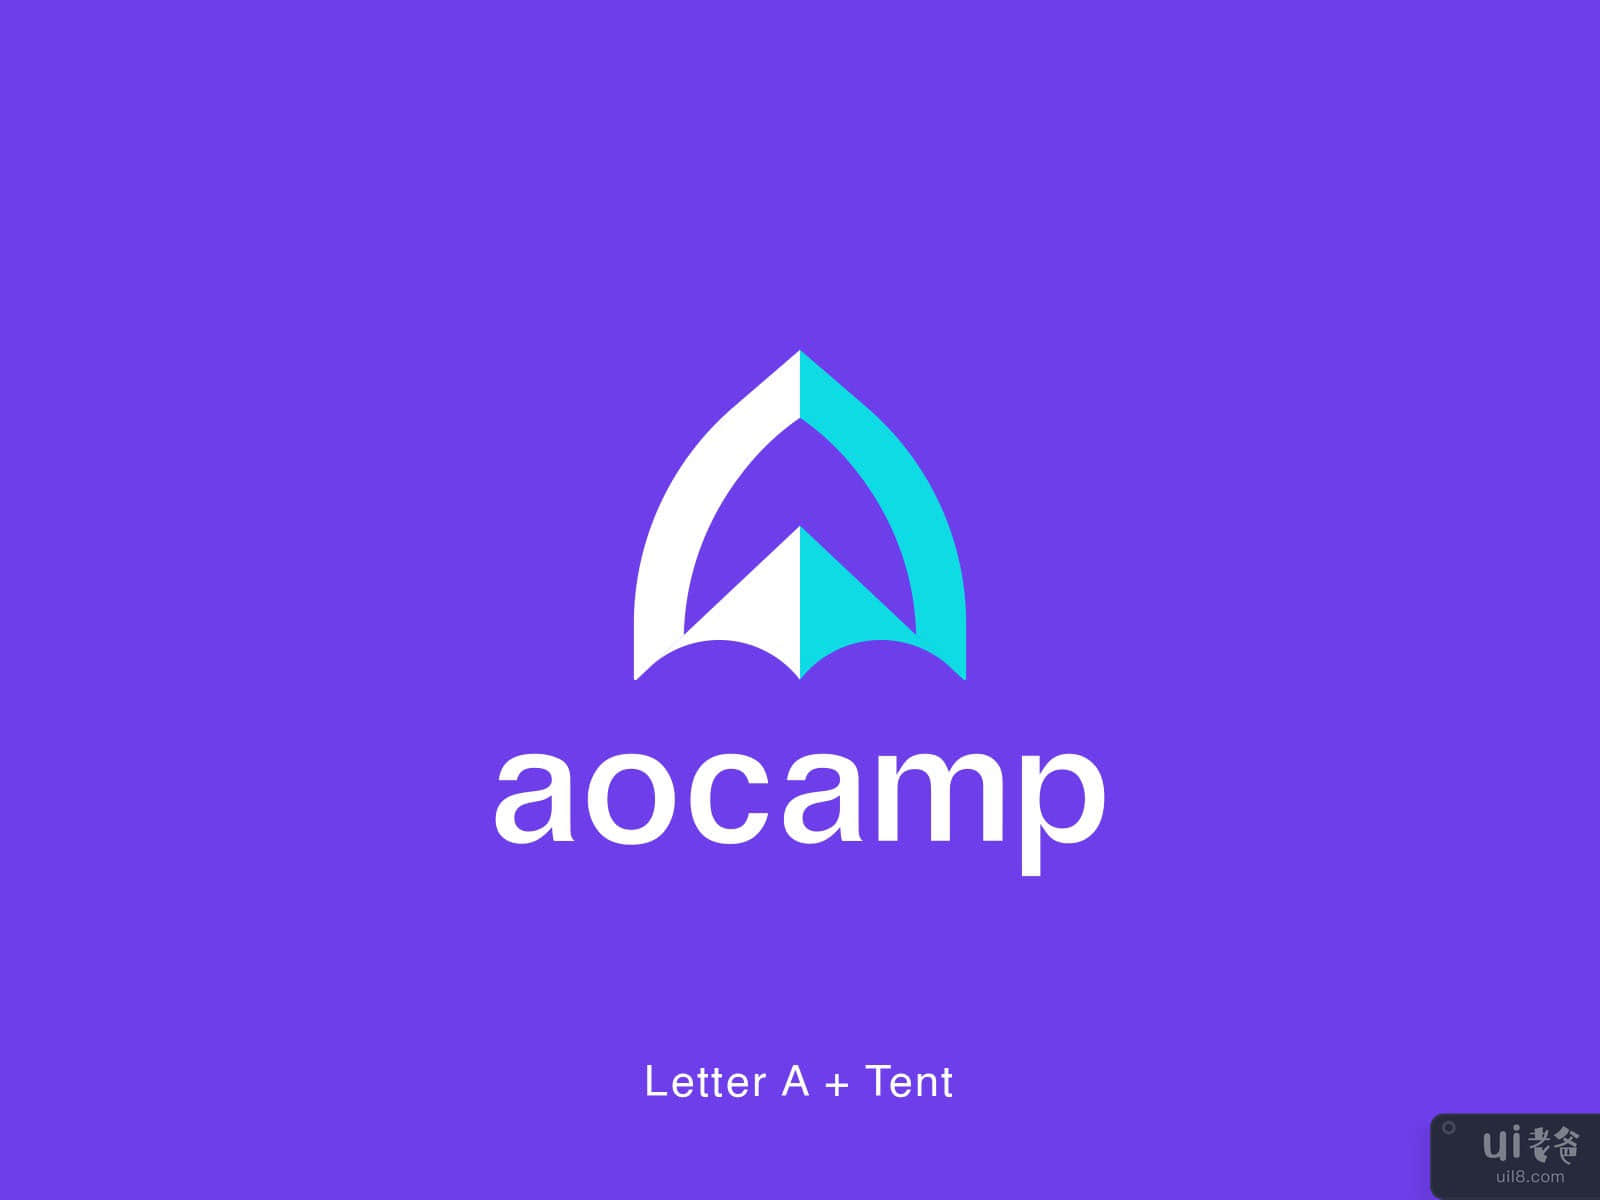 Letter A + tent Modern logo